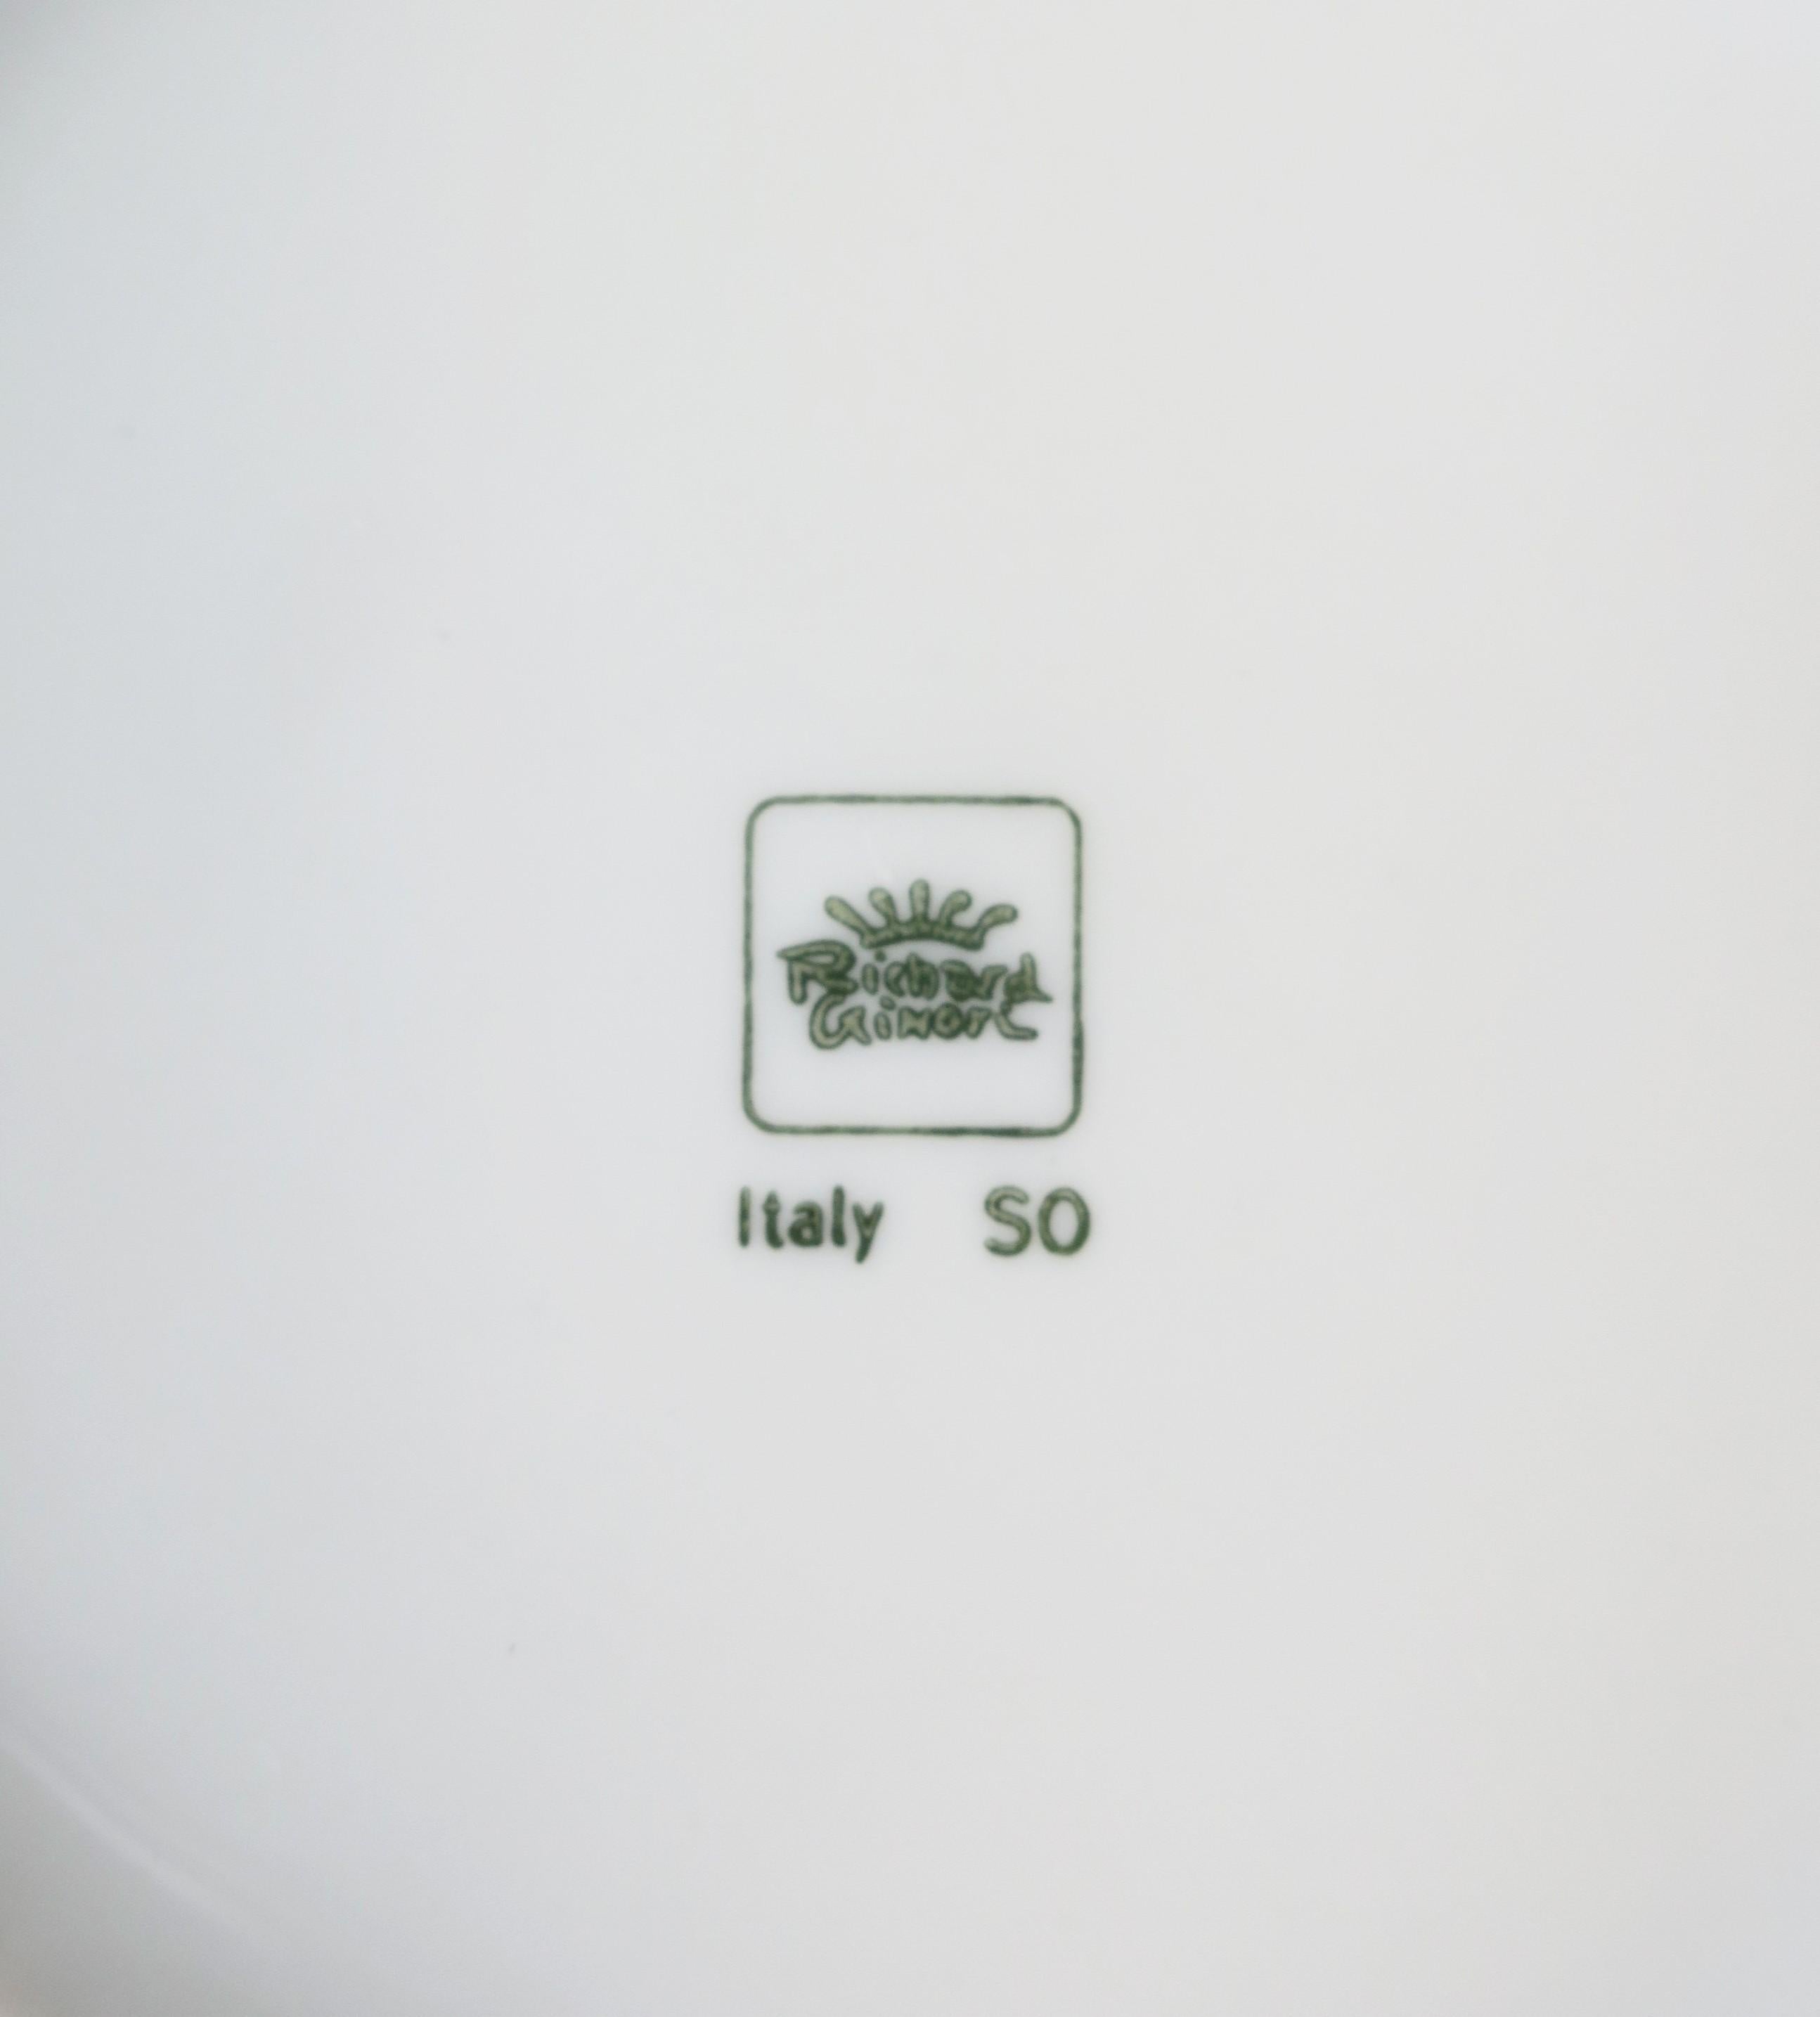 Richard Ginori Porcelain Ashtray or Catchall for Villa d'Este Hotel Italy 2